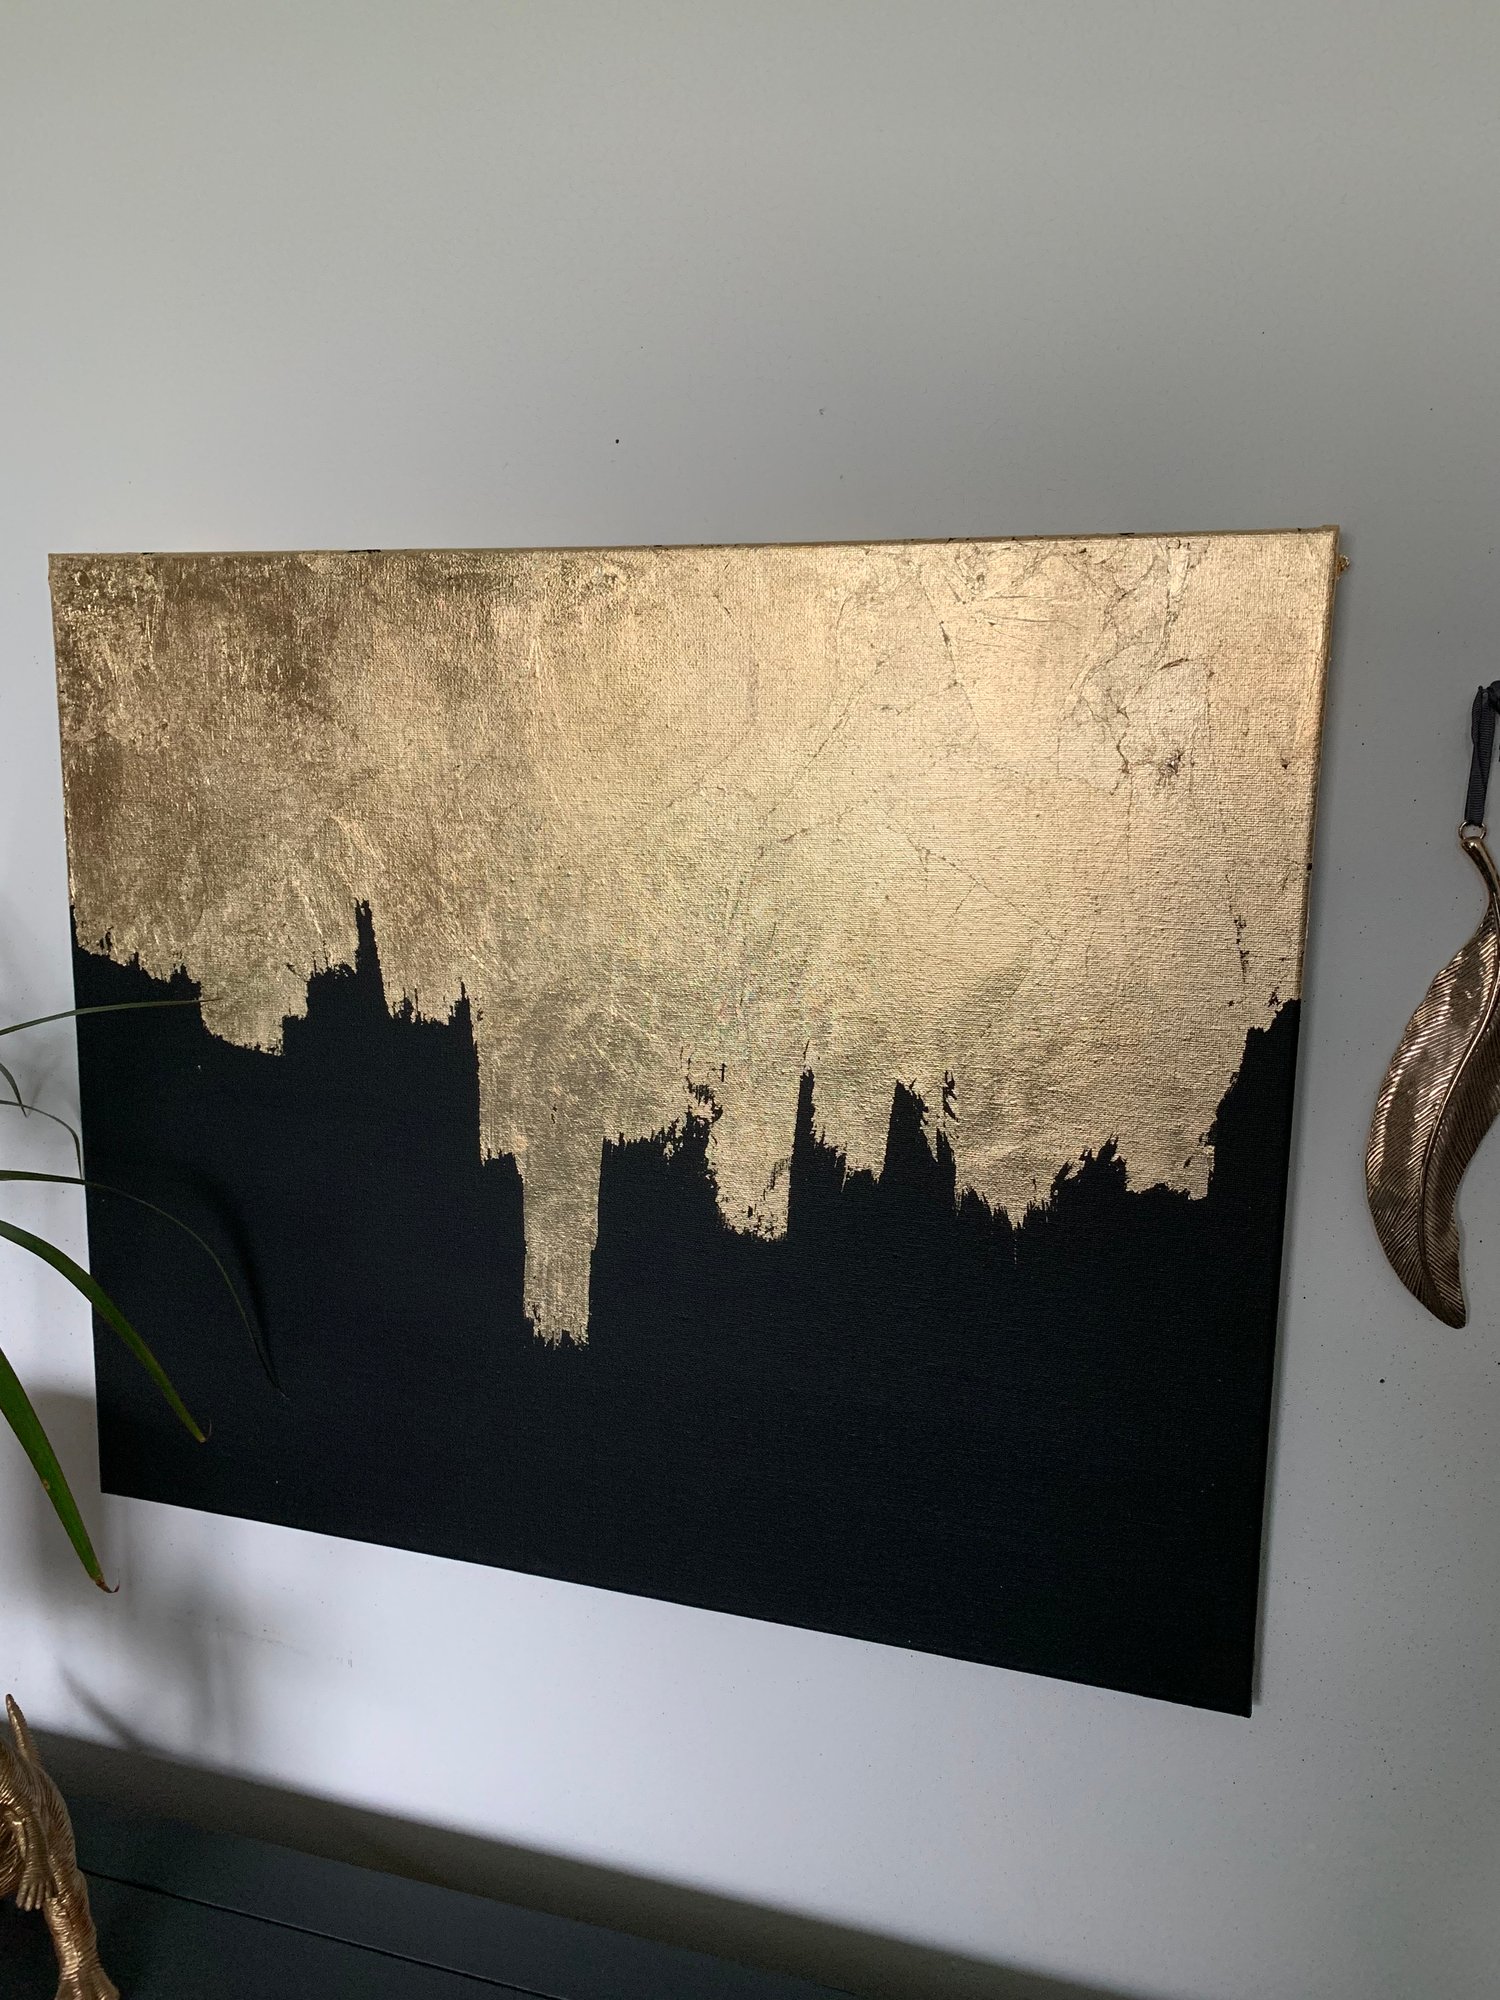 Image of Large black & gold leaf canvas designed by Ethan & Grace’s